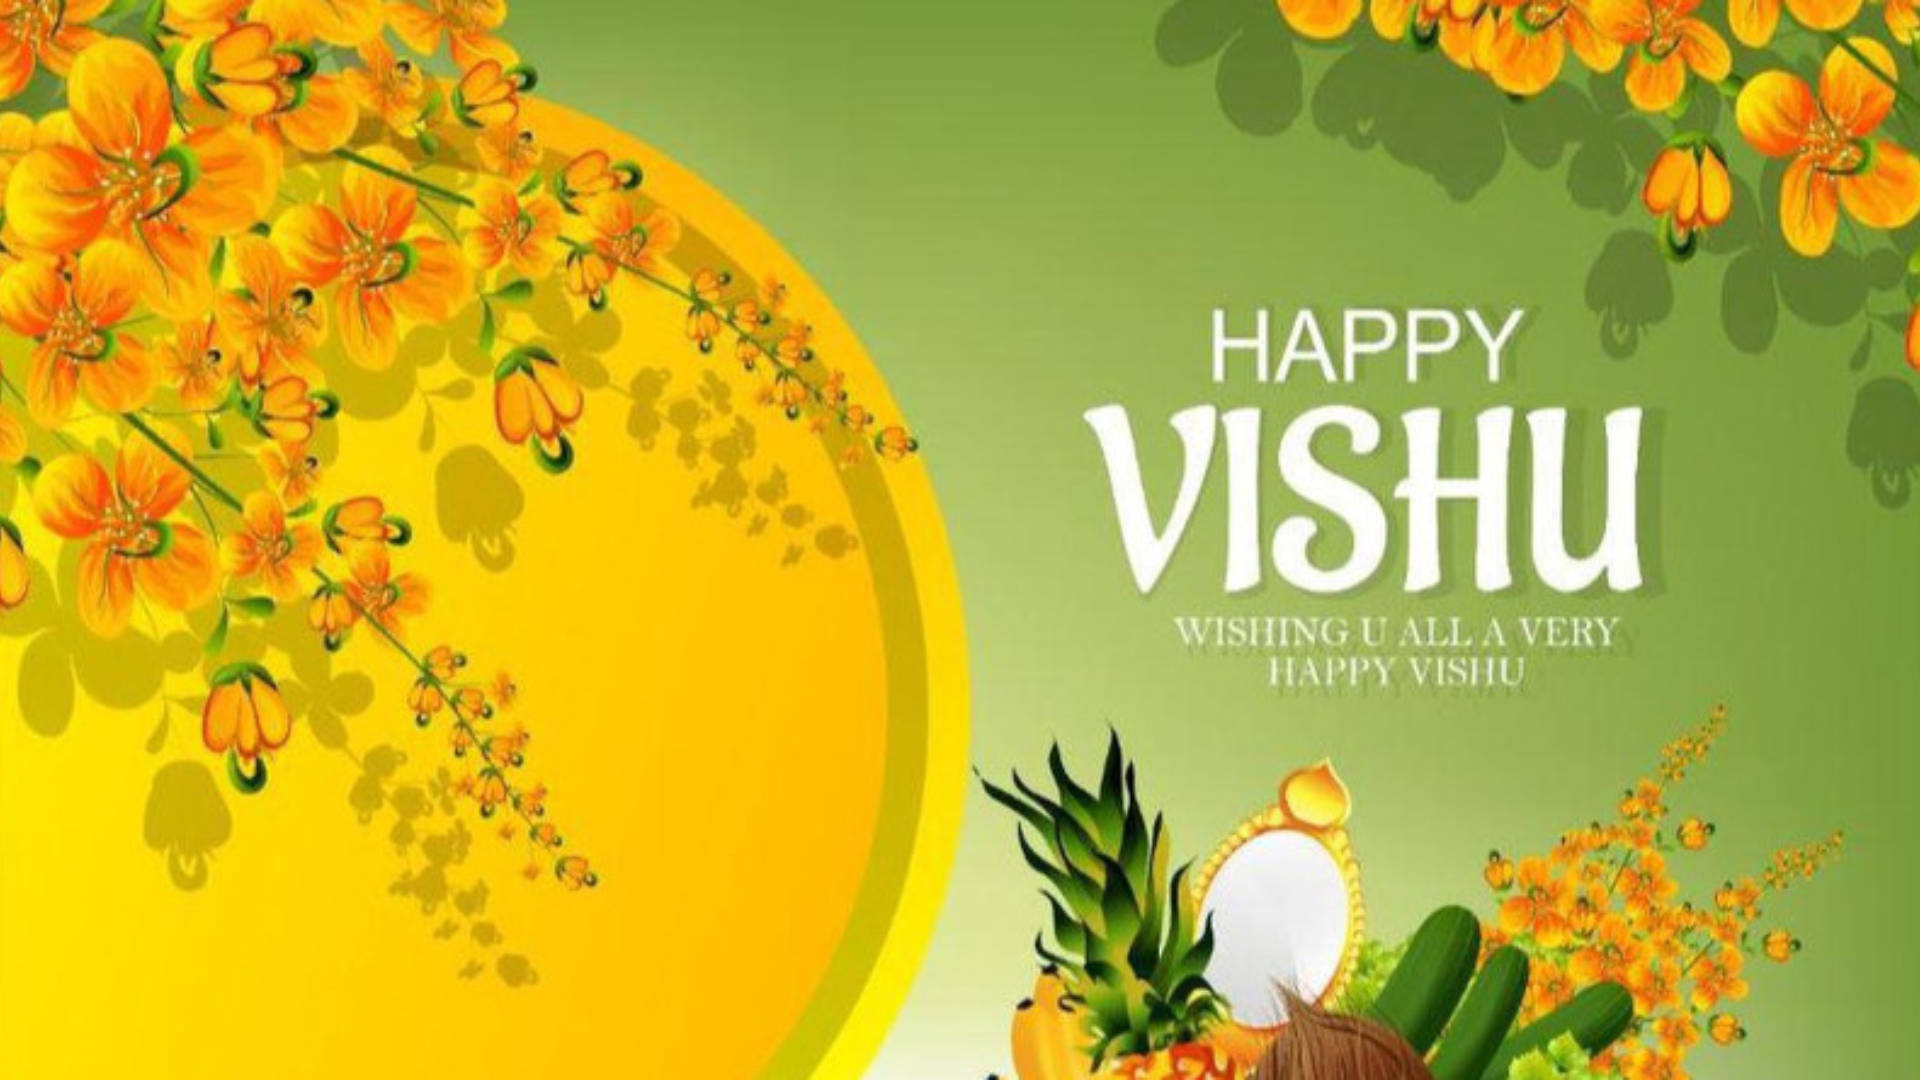 Happy Vishu Greeting Image Frangipani Fruits Wallpaper